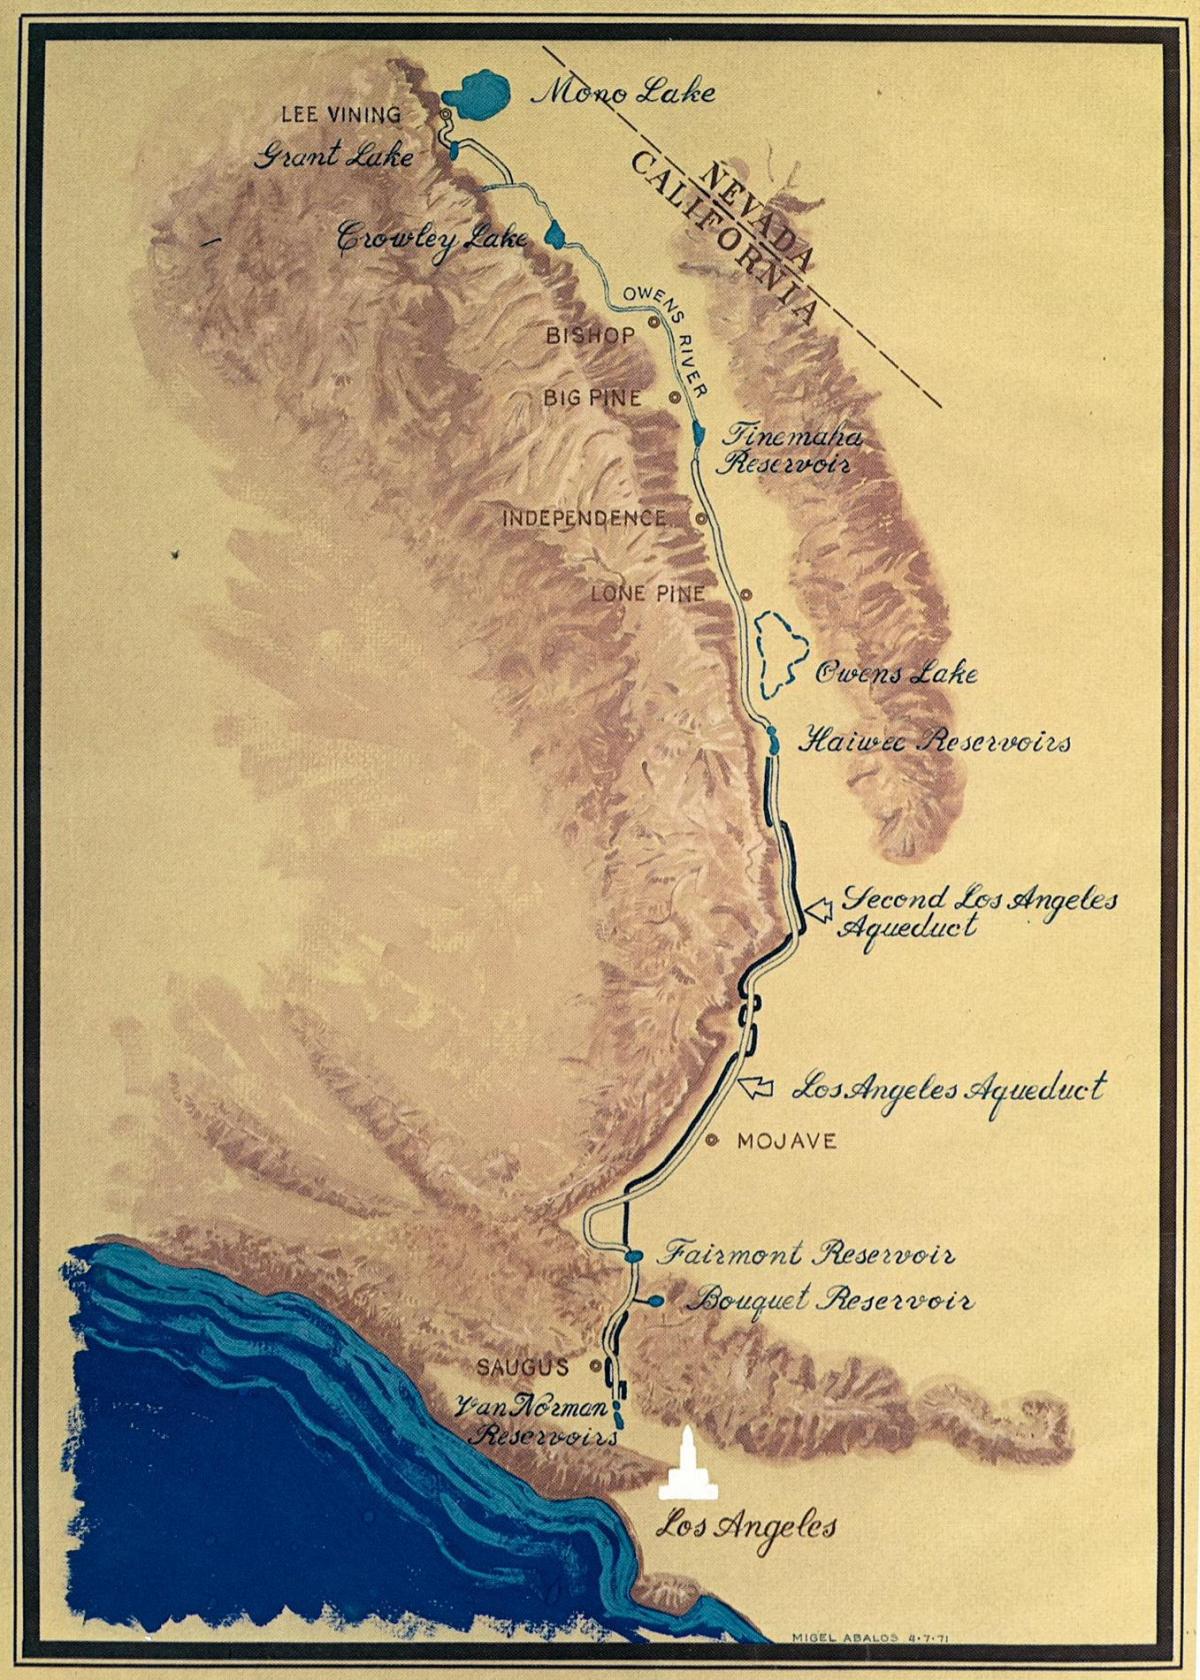 map of Los Angeles aqueduct